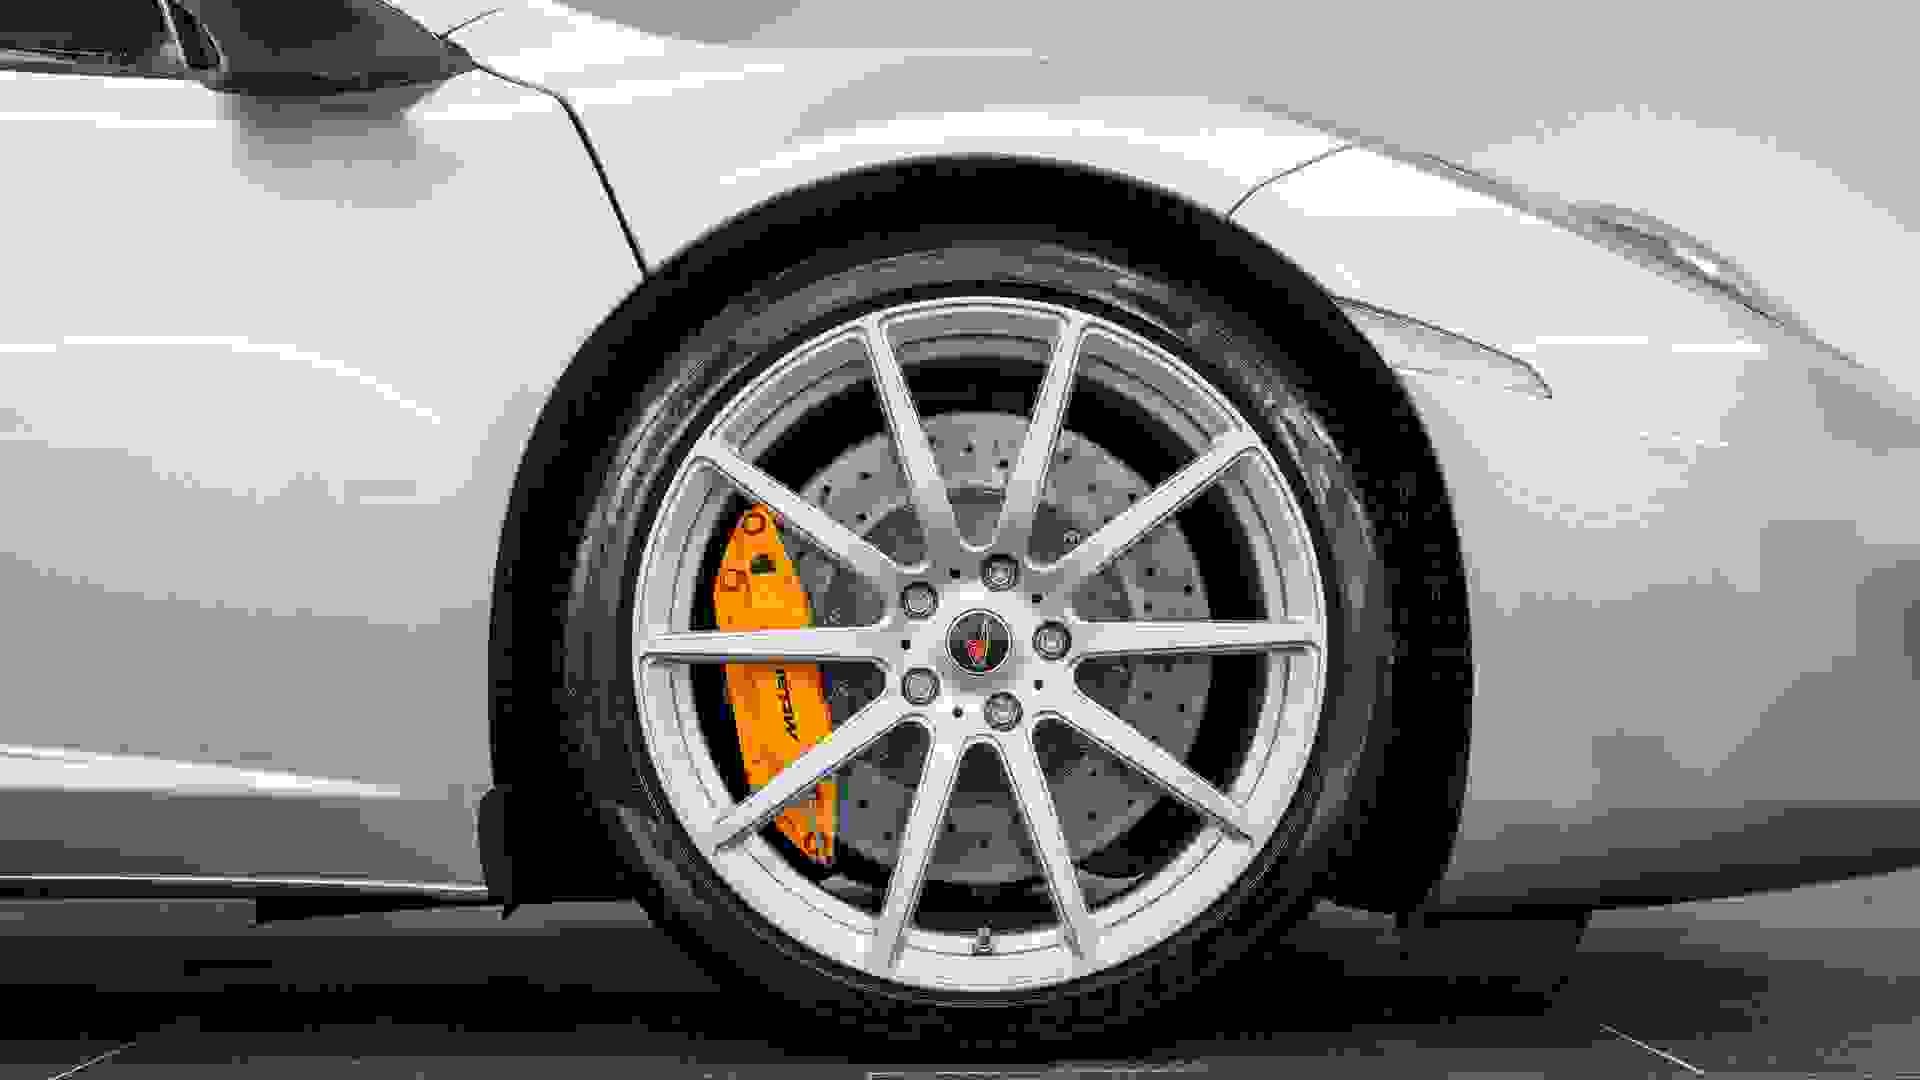 McLaren MP4-12C Photo 3b427c14-8cd3-4218-b8de-5c9761d867b2.jpg